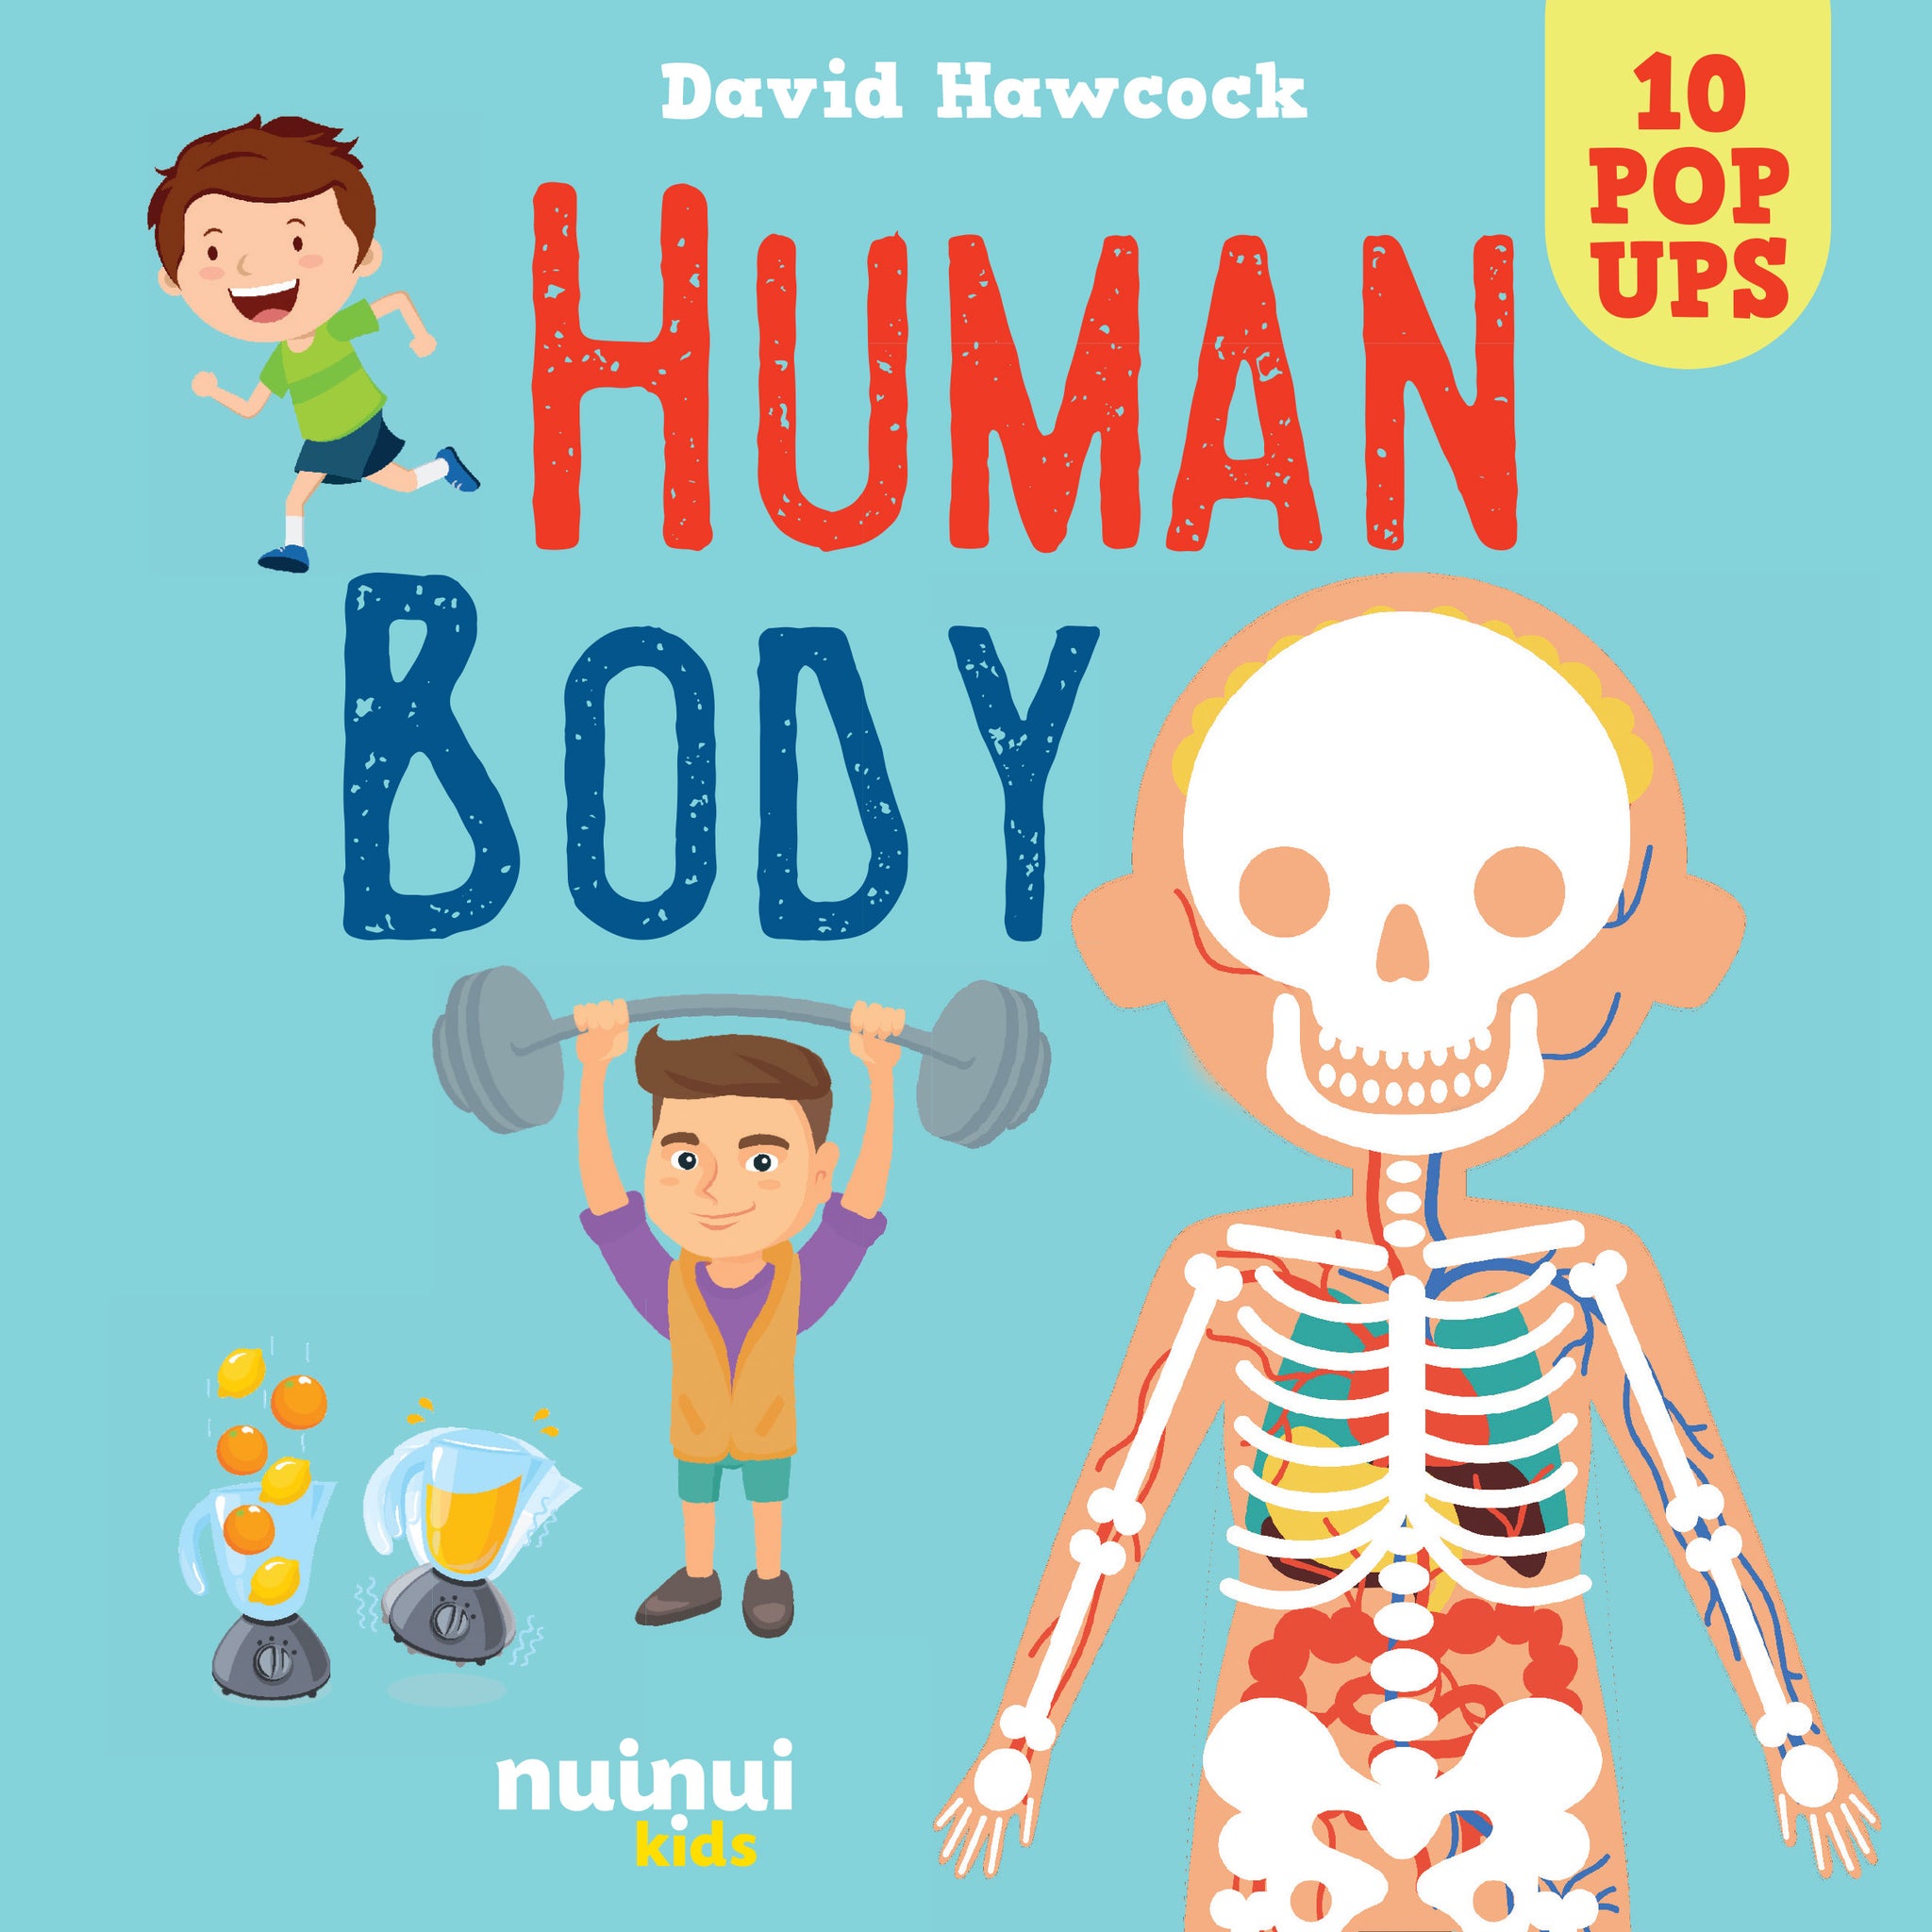 Amazing pop-ups - Human body